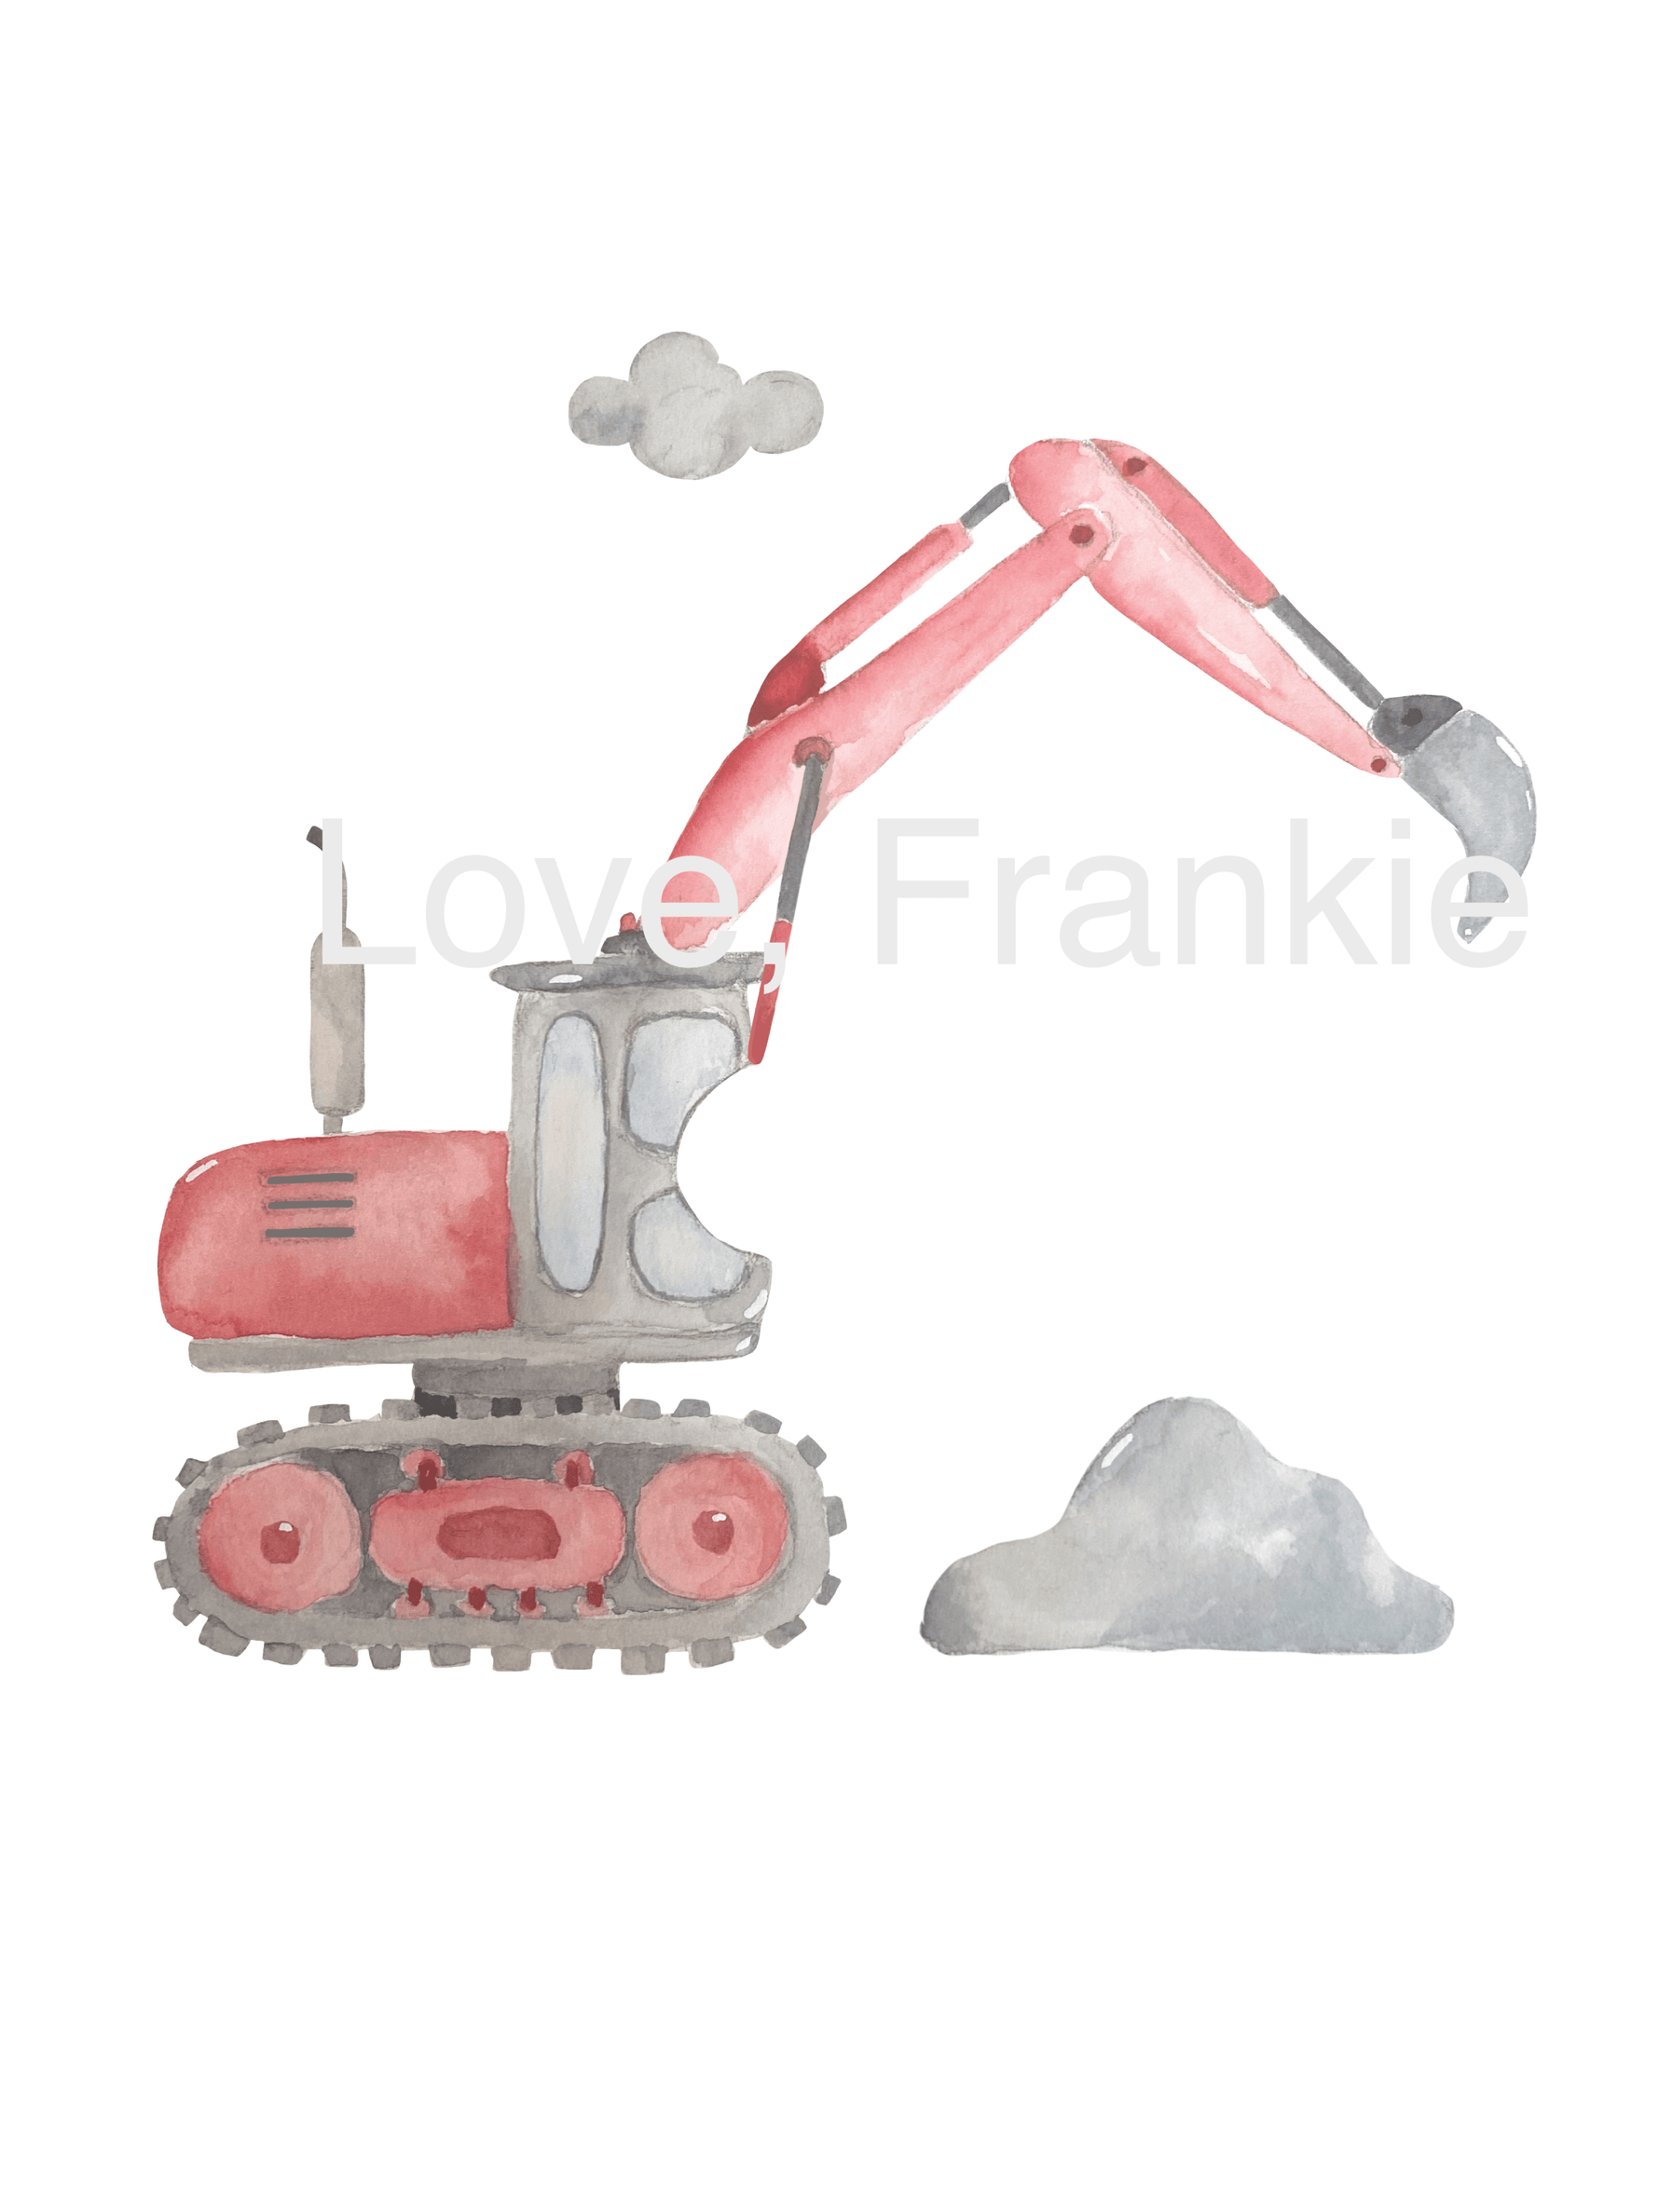 Construction Vehicle Digital Art Prints - lovefrankieart